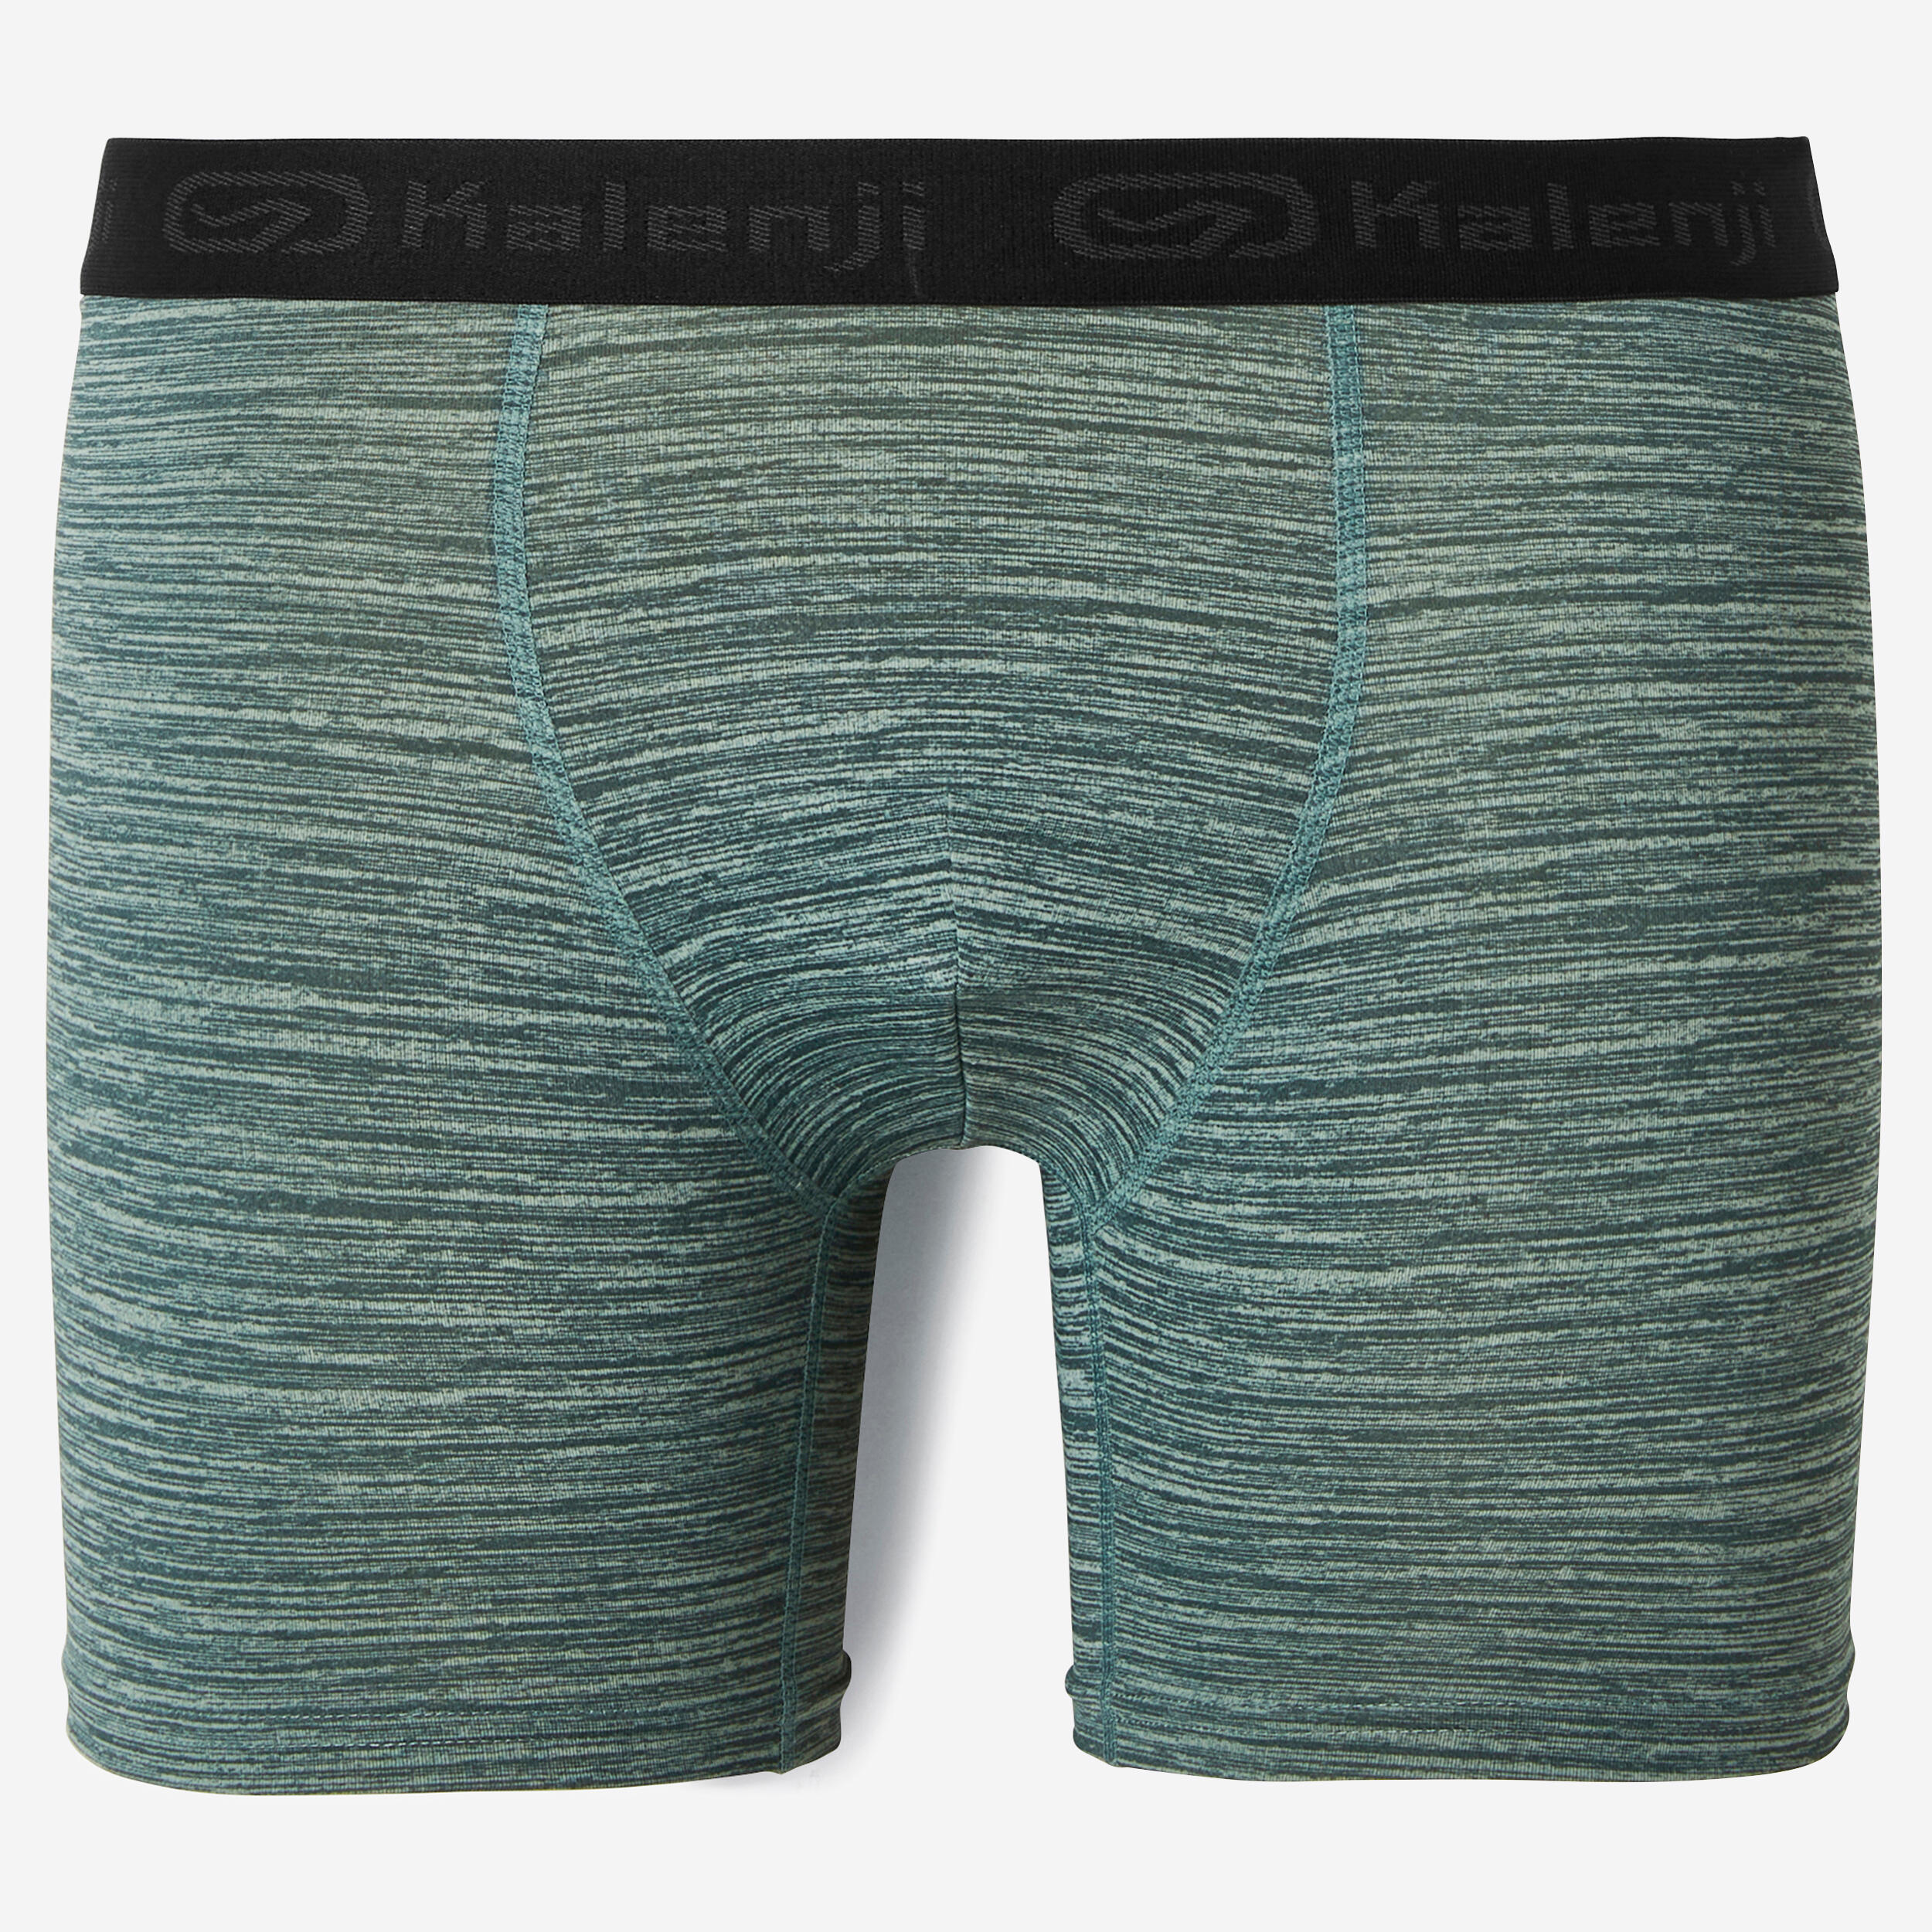 Decathlon sports underwear men's quick-drying mid-waist tight